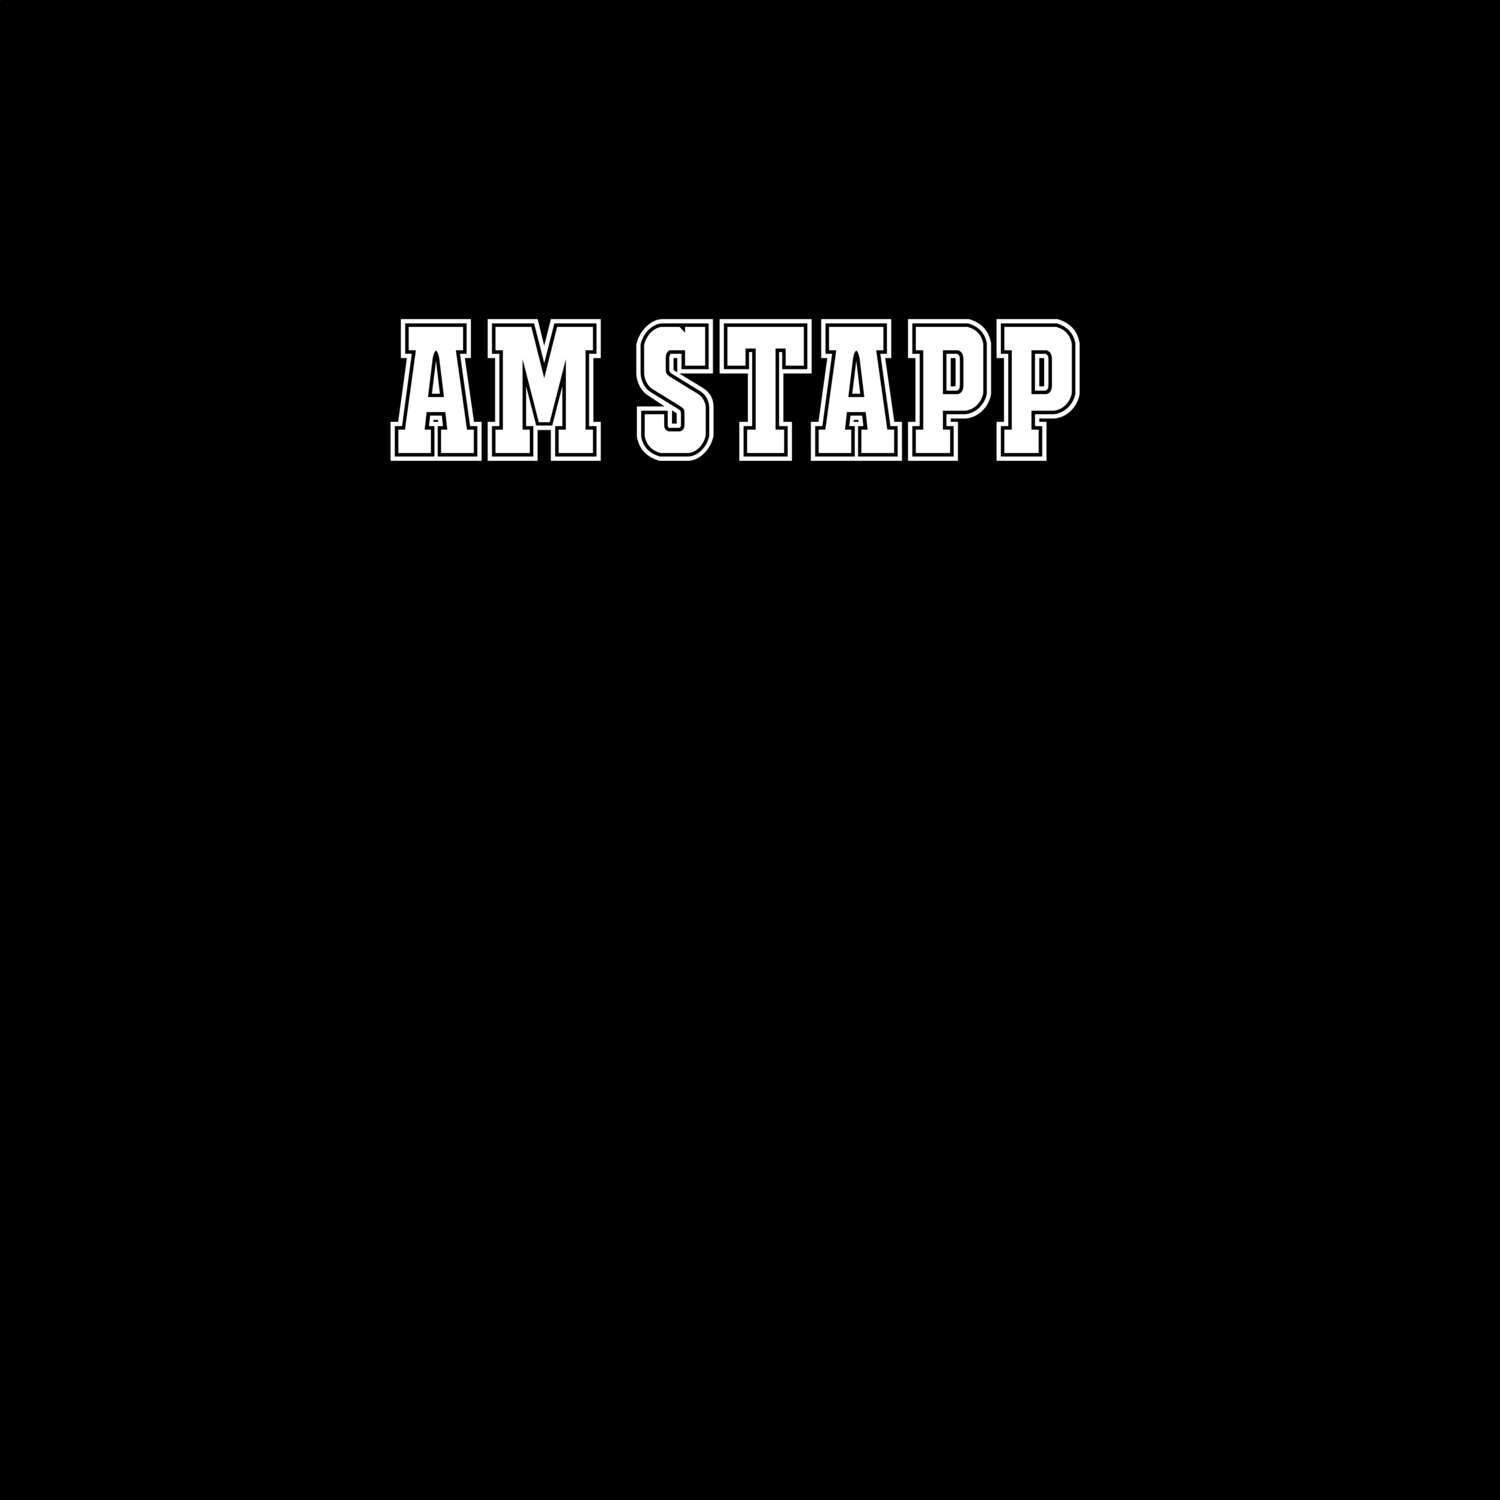 Am Stapp T-Shirt »Classic«